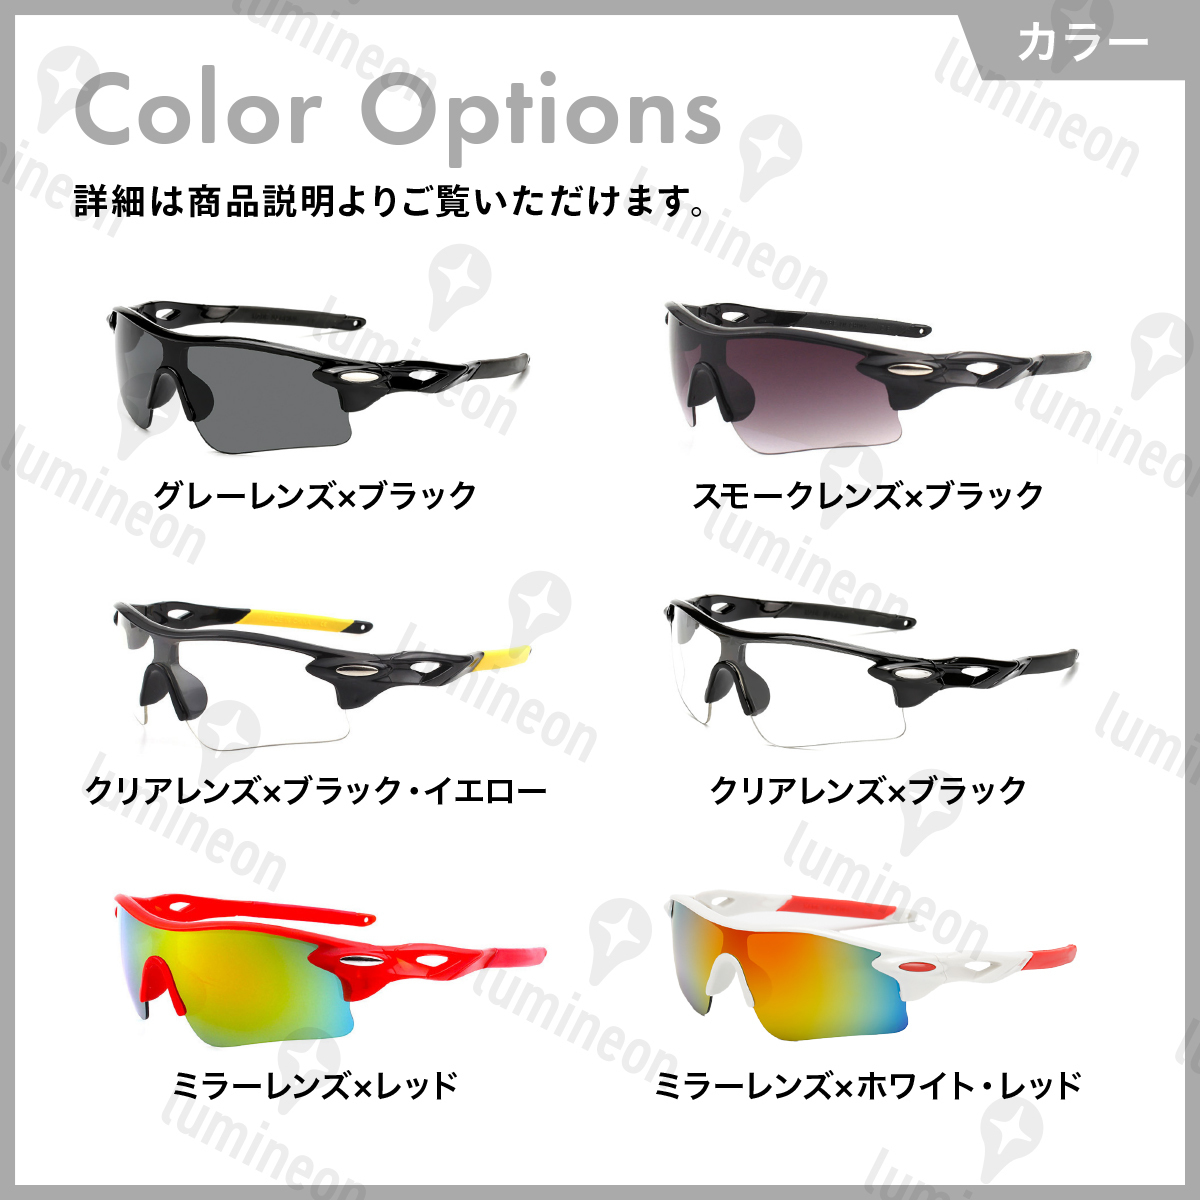  sports sunglasses men's lady's fishing Golf bicycle Drive cycling running tennis stylish light weight cheap g154l 3